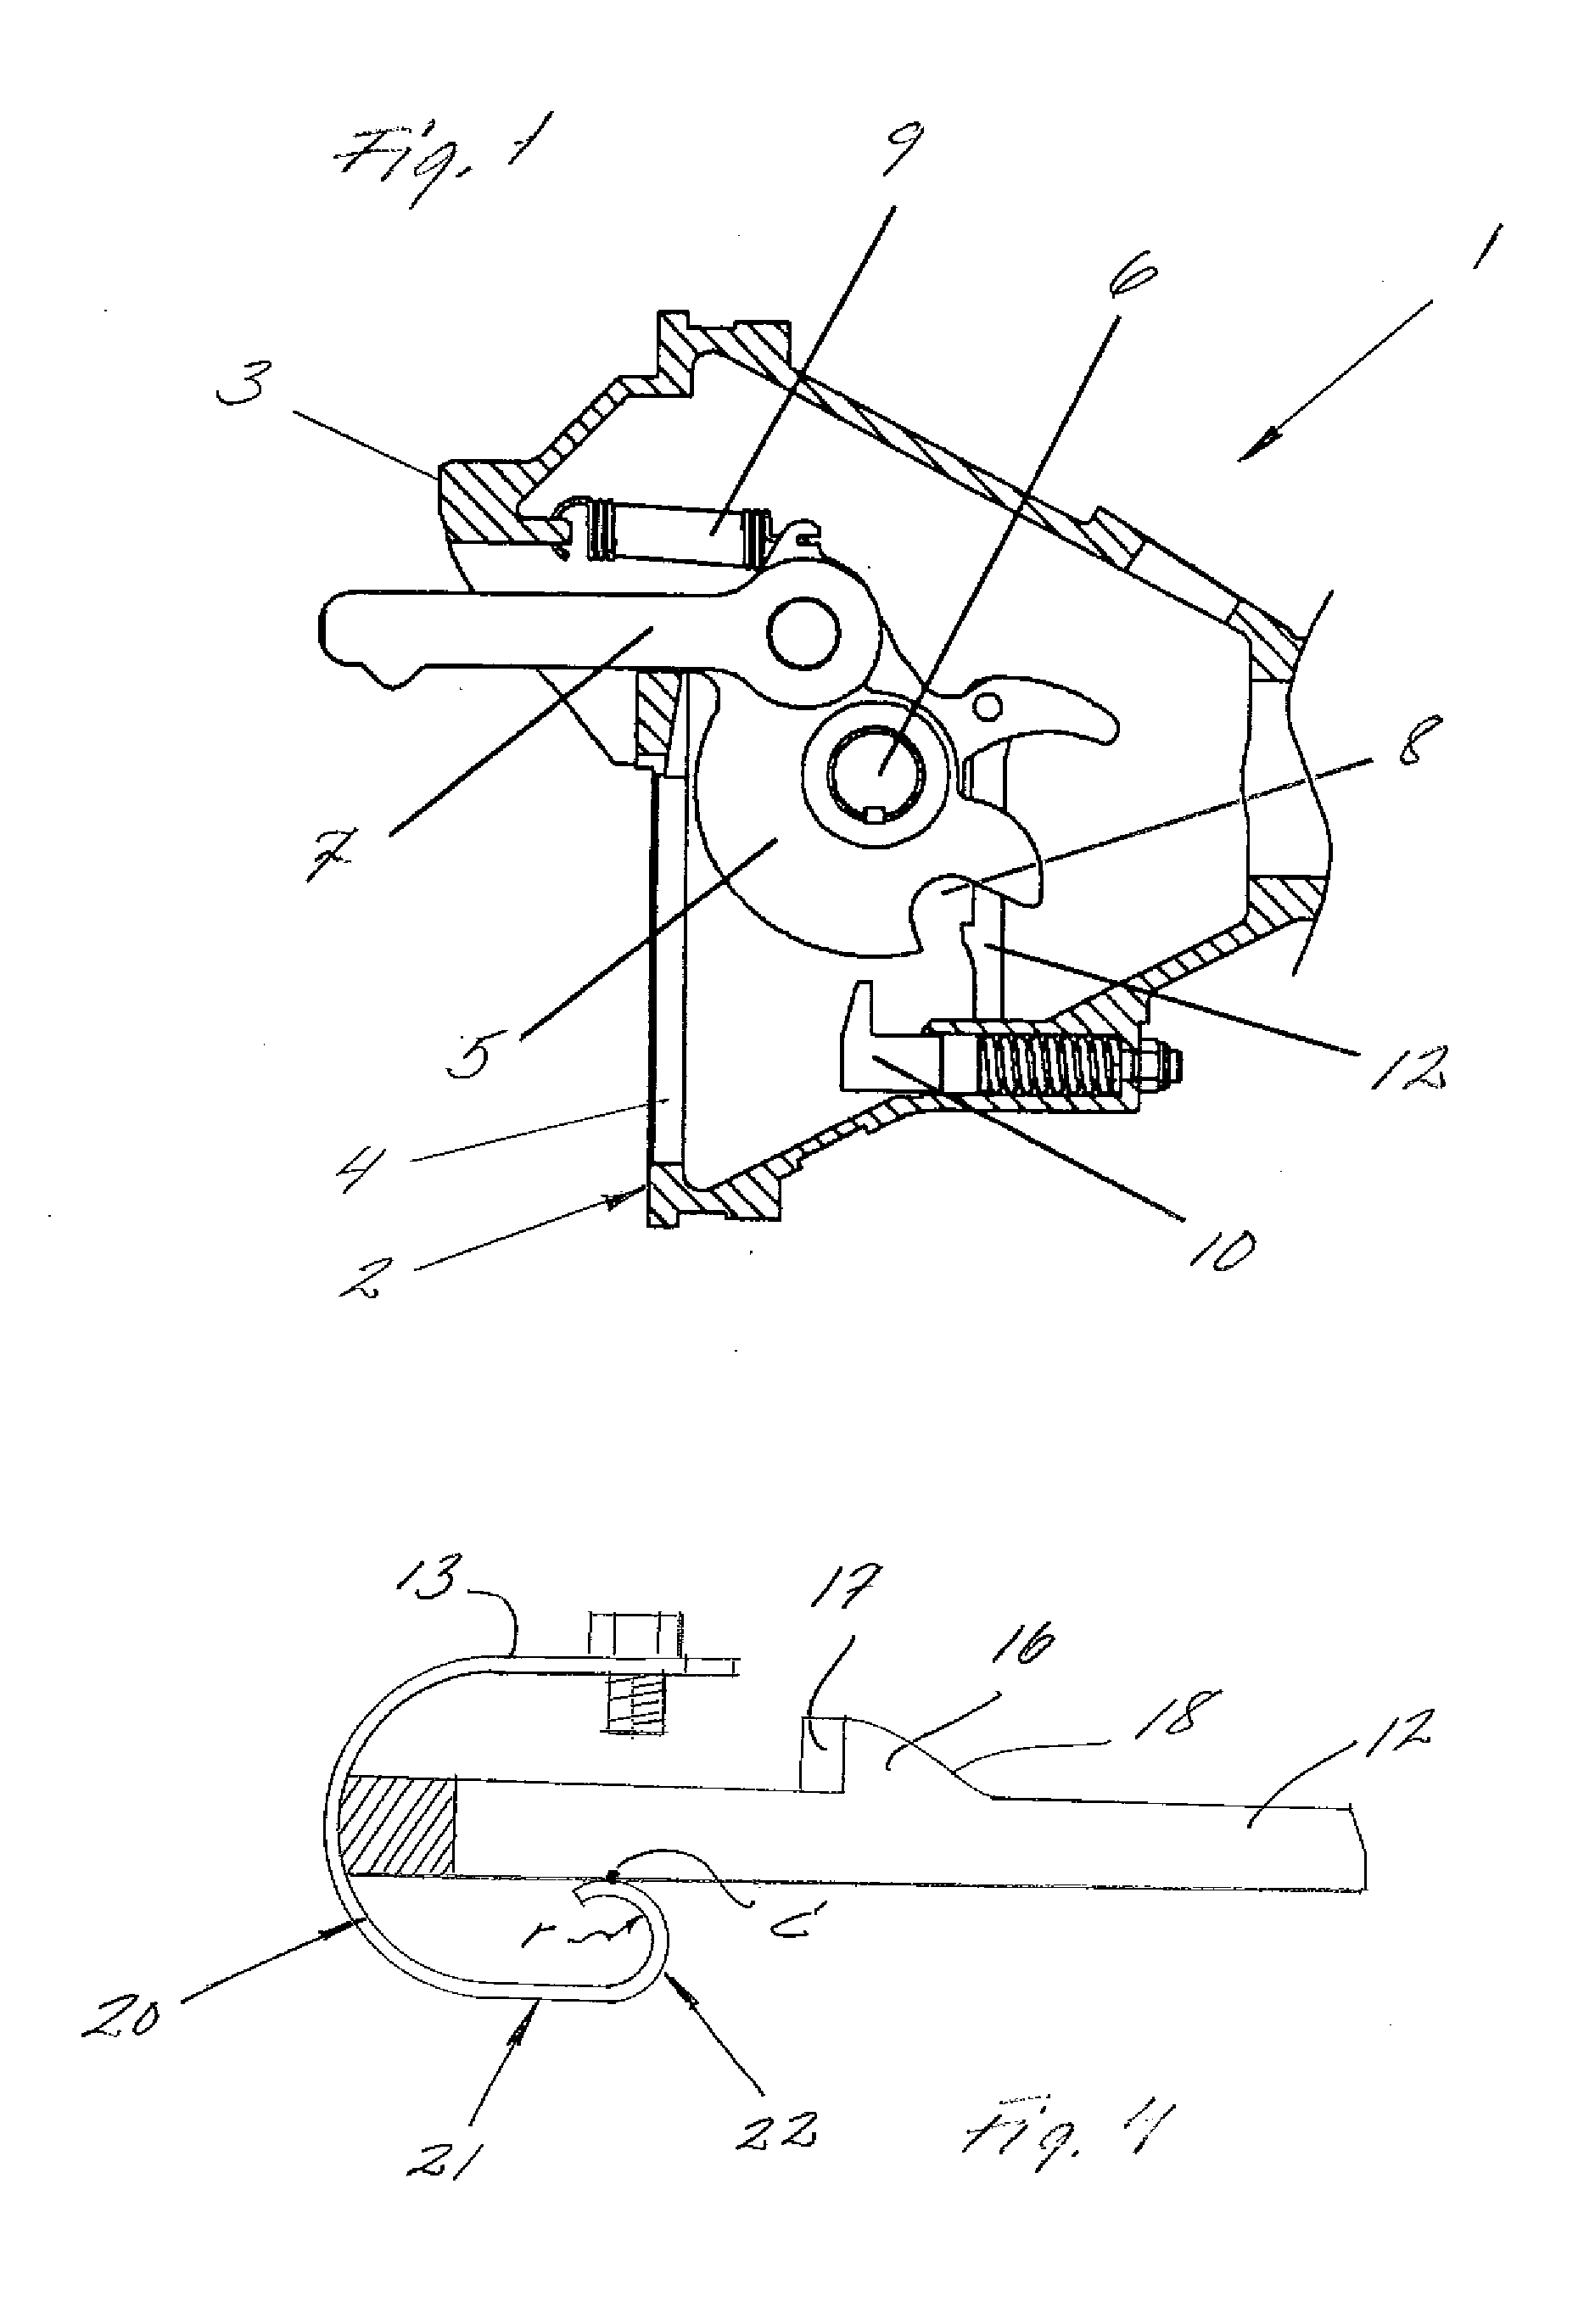 Mechanical coupling in a draftgear